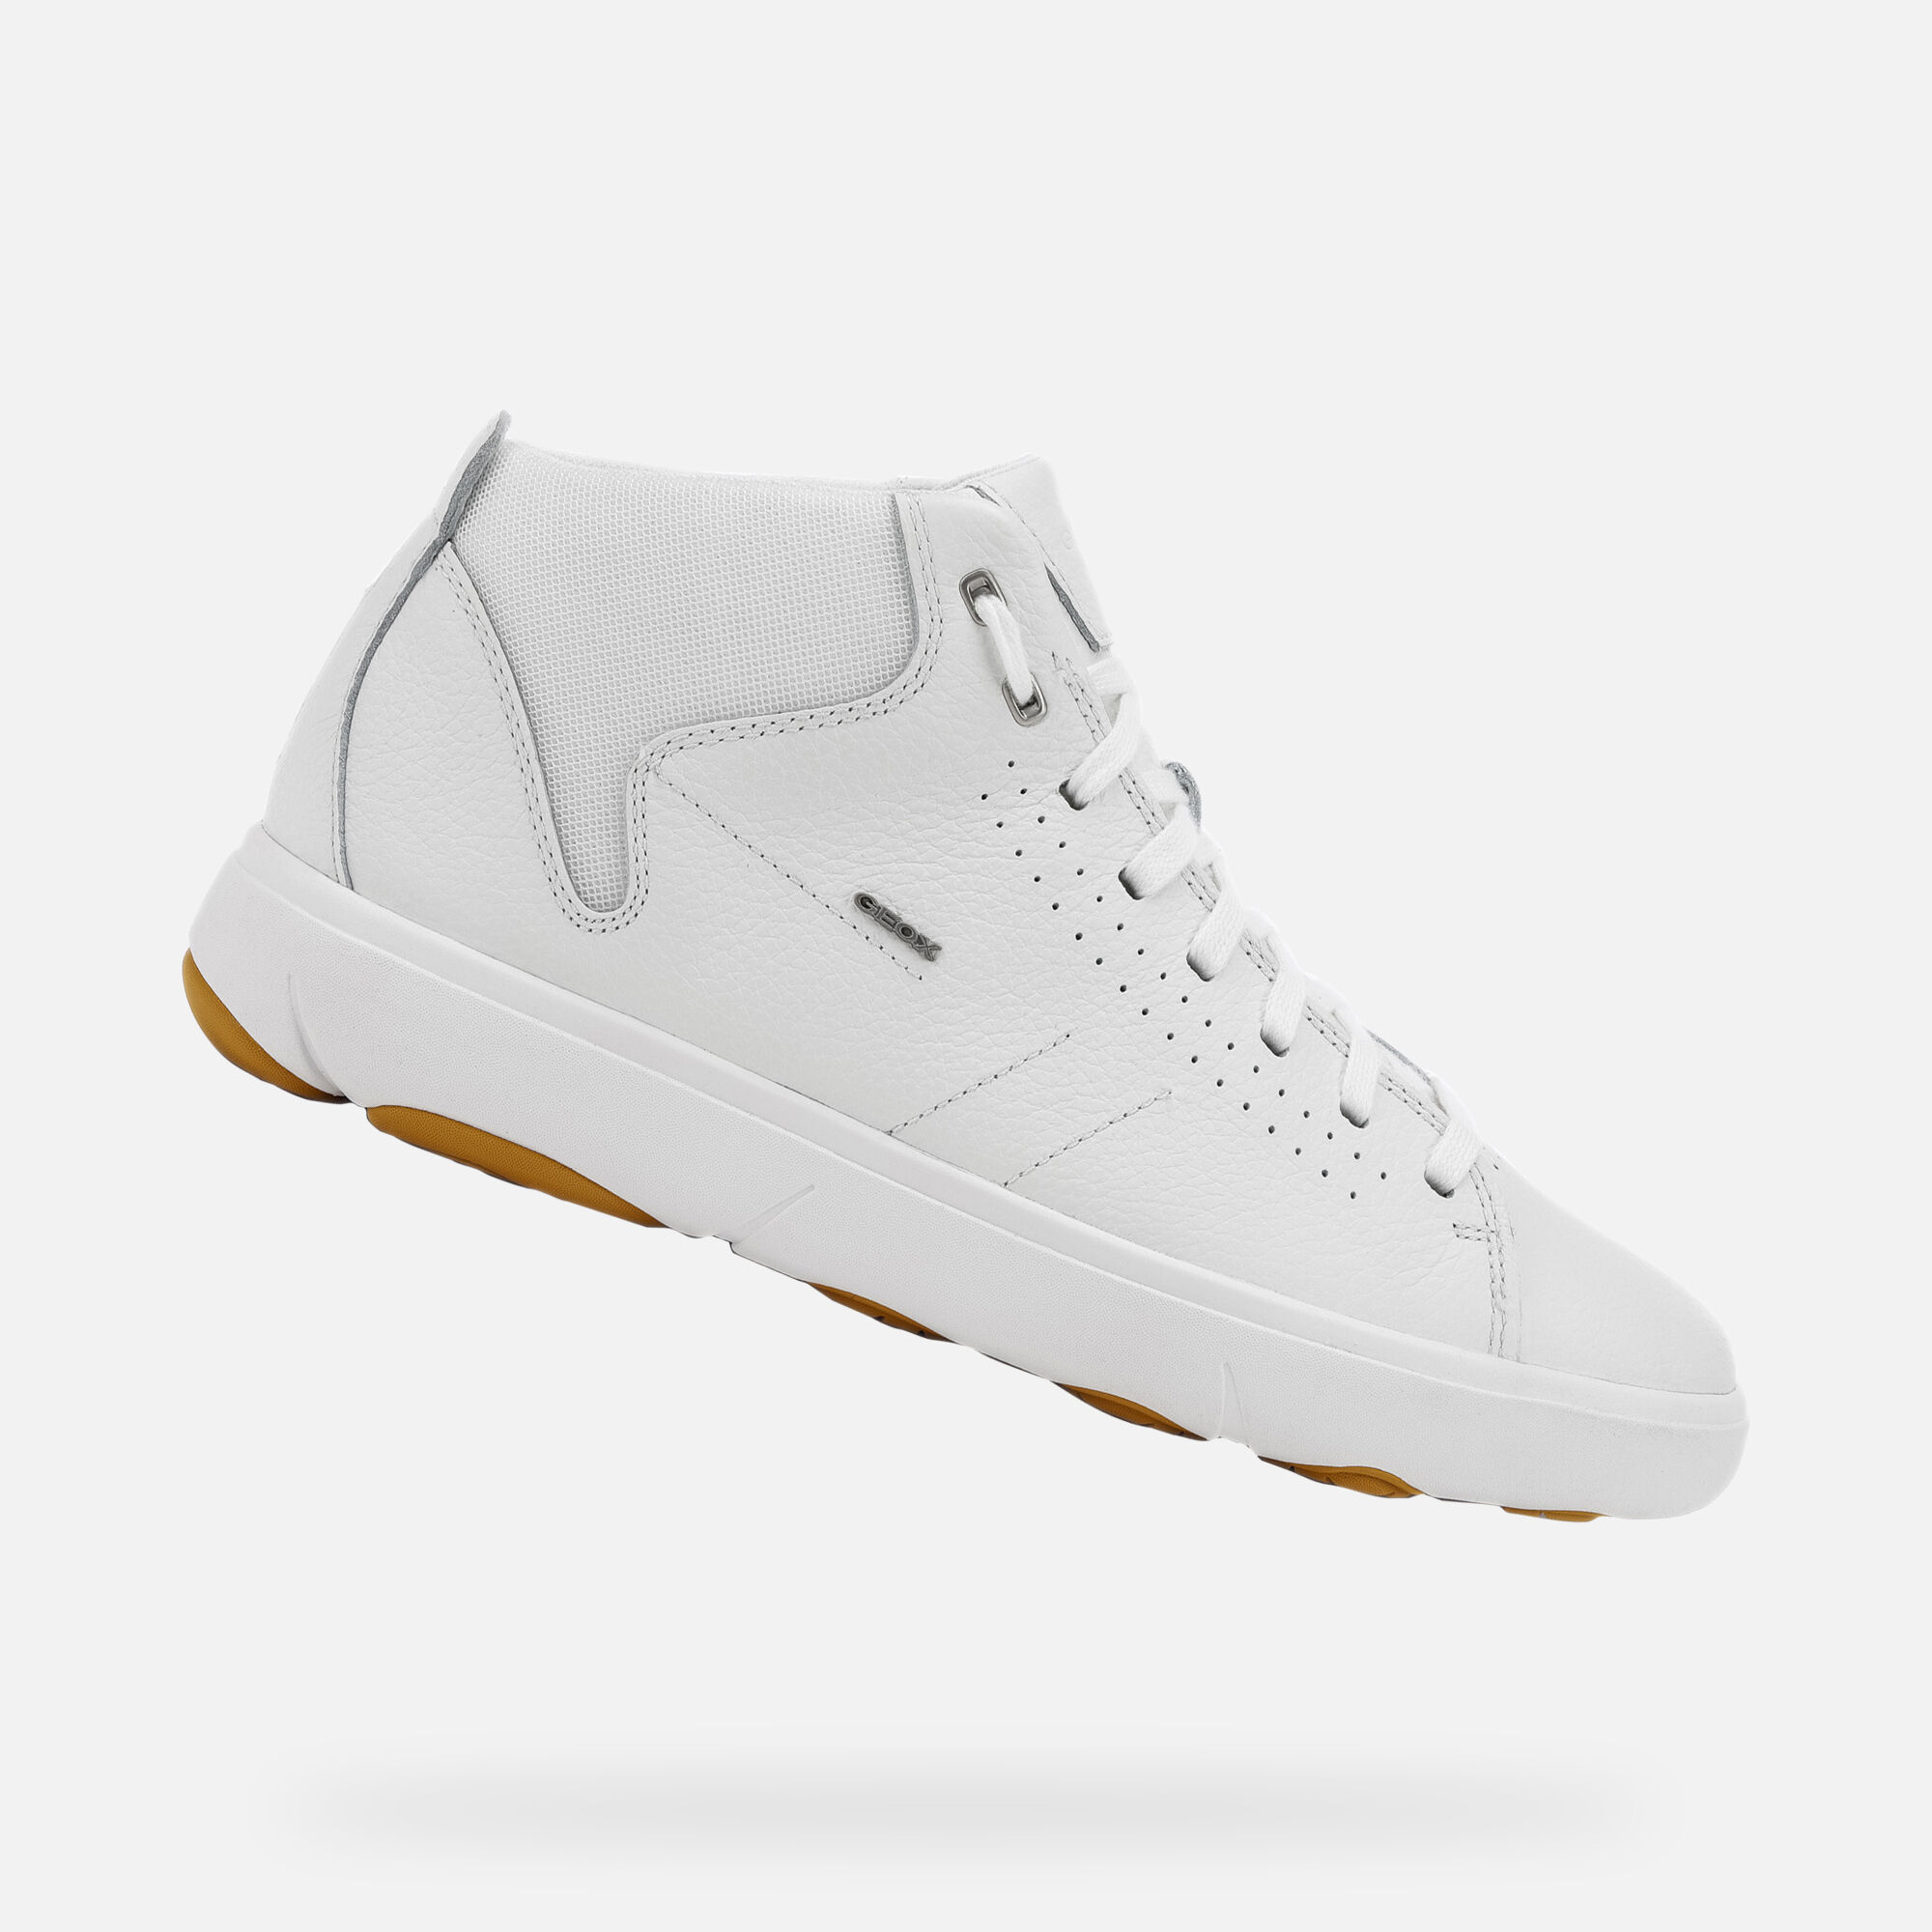 Geox NEBULA Y Man White Sneakers | Geox ® FW 19/20